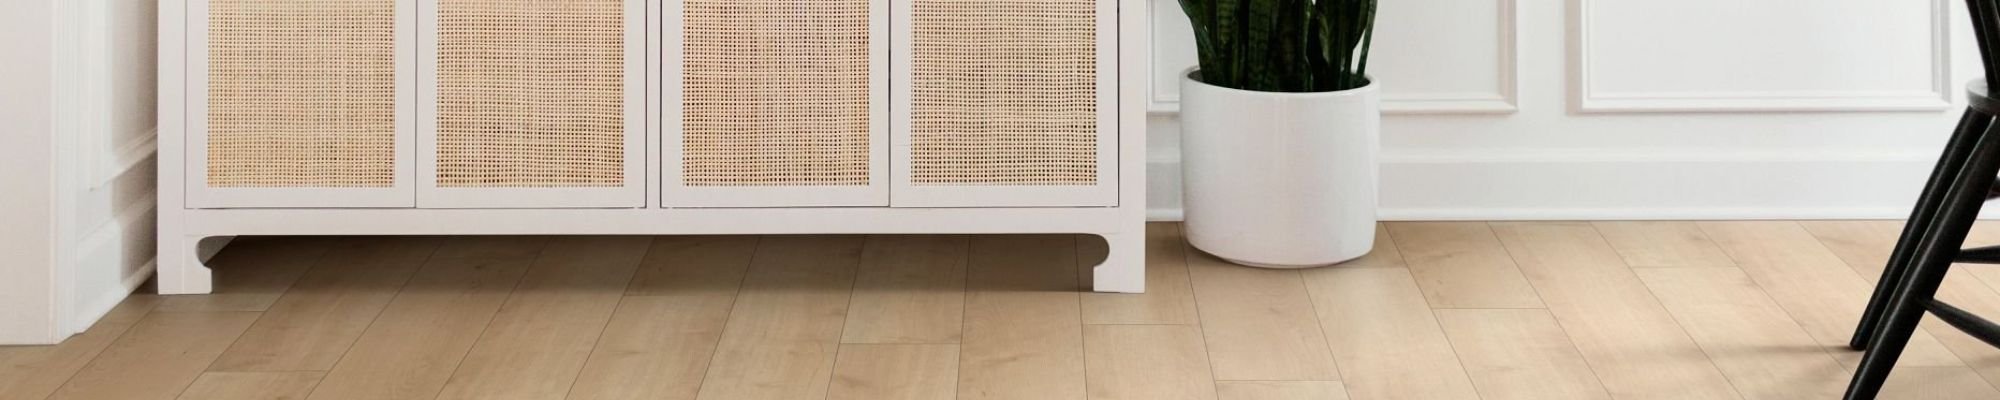 Furniture on hardwood - Success Floor Covering LLC